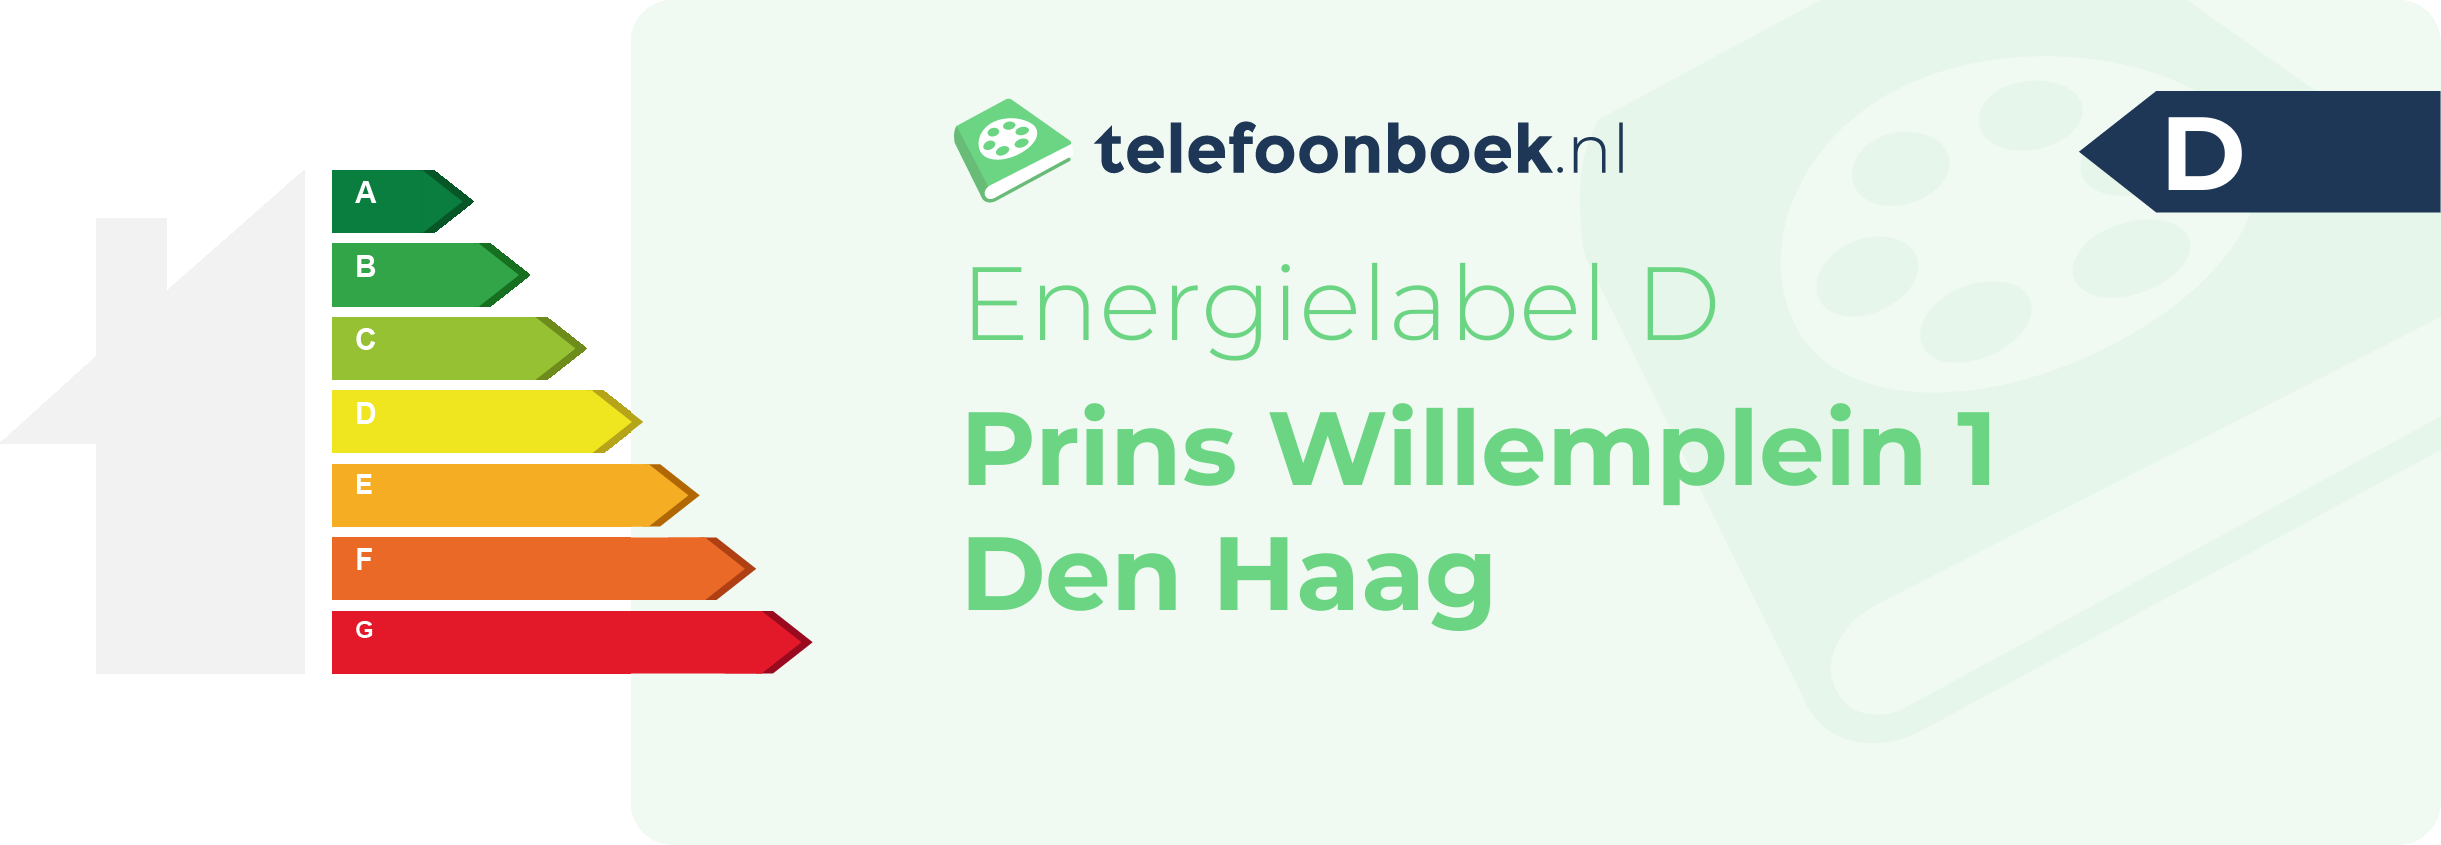 Energielabel Prins Willemplein 1 Den Haag